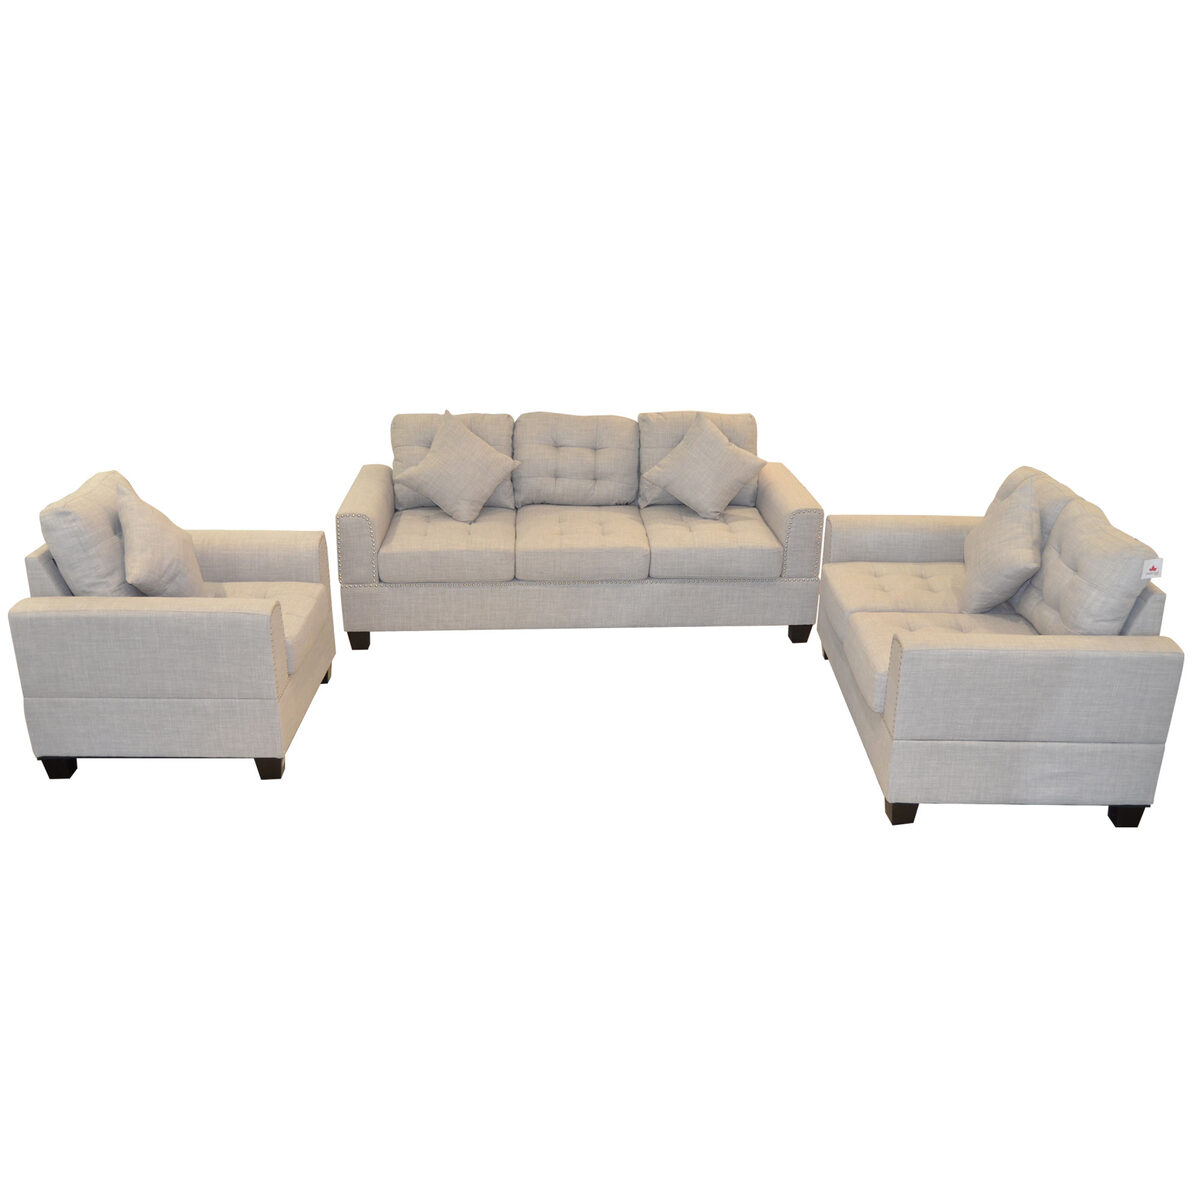 Maple Leaf Sofa Set 3+2+1 MLM111516 Grey,Size 1 Seater Size:85x85x90,2 Seater Size:85x85x145,3 Seater Size:85x85x204. (HxWXL- Cms)